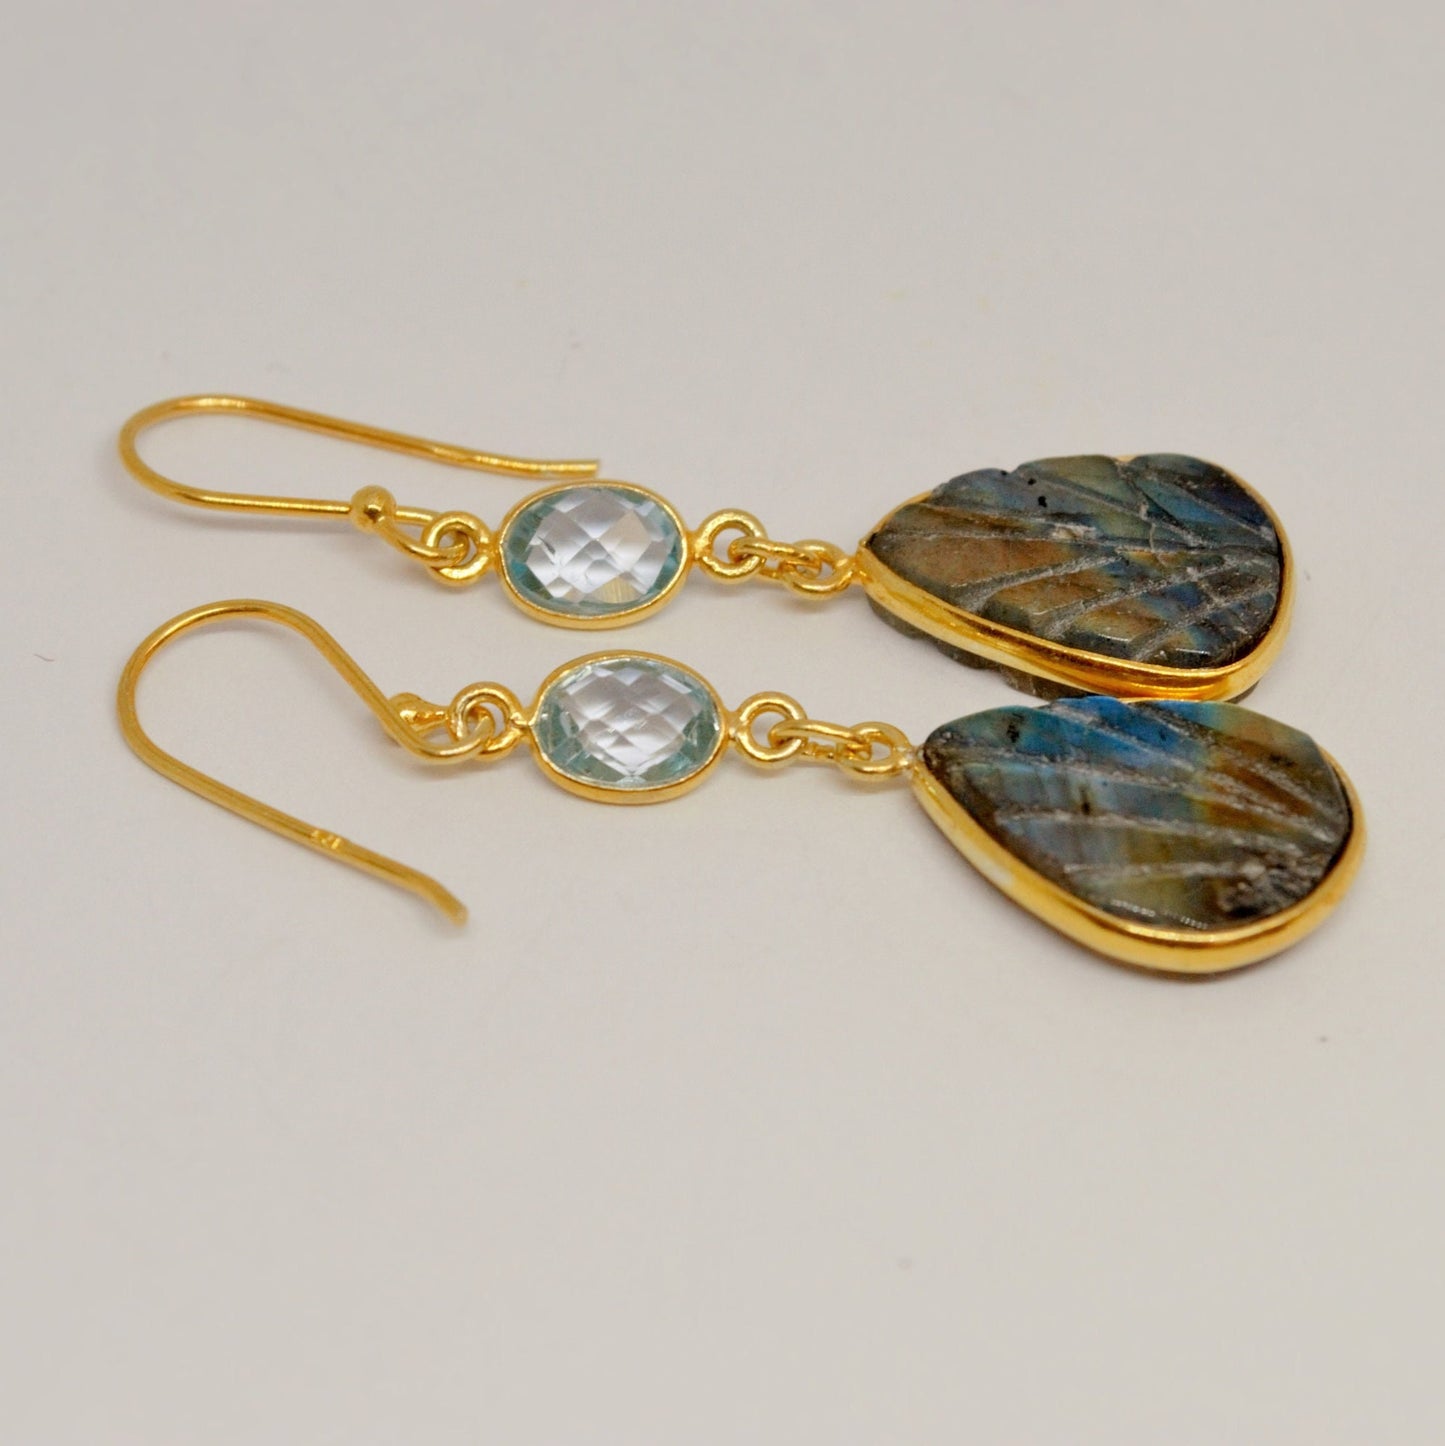 Labradorite, Blue Topaz Earrings, Dangle Gemstone Earrings, Unique Gold Plated Sterling Silver Earrings, December Birthstone, Gift For Her